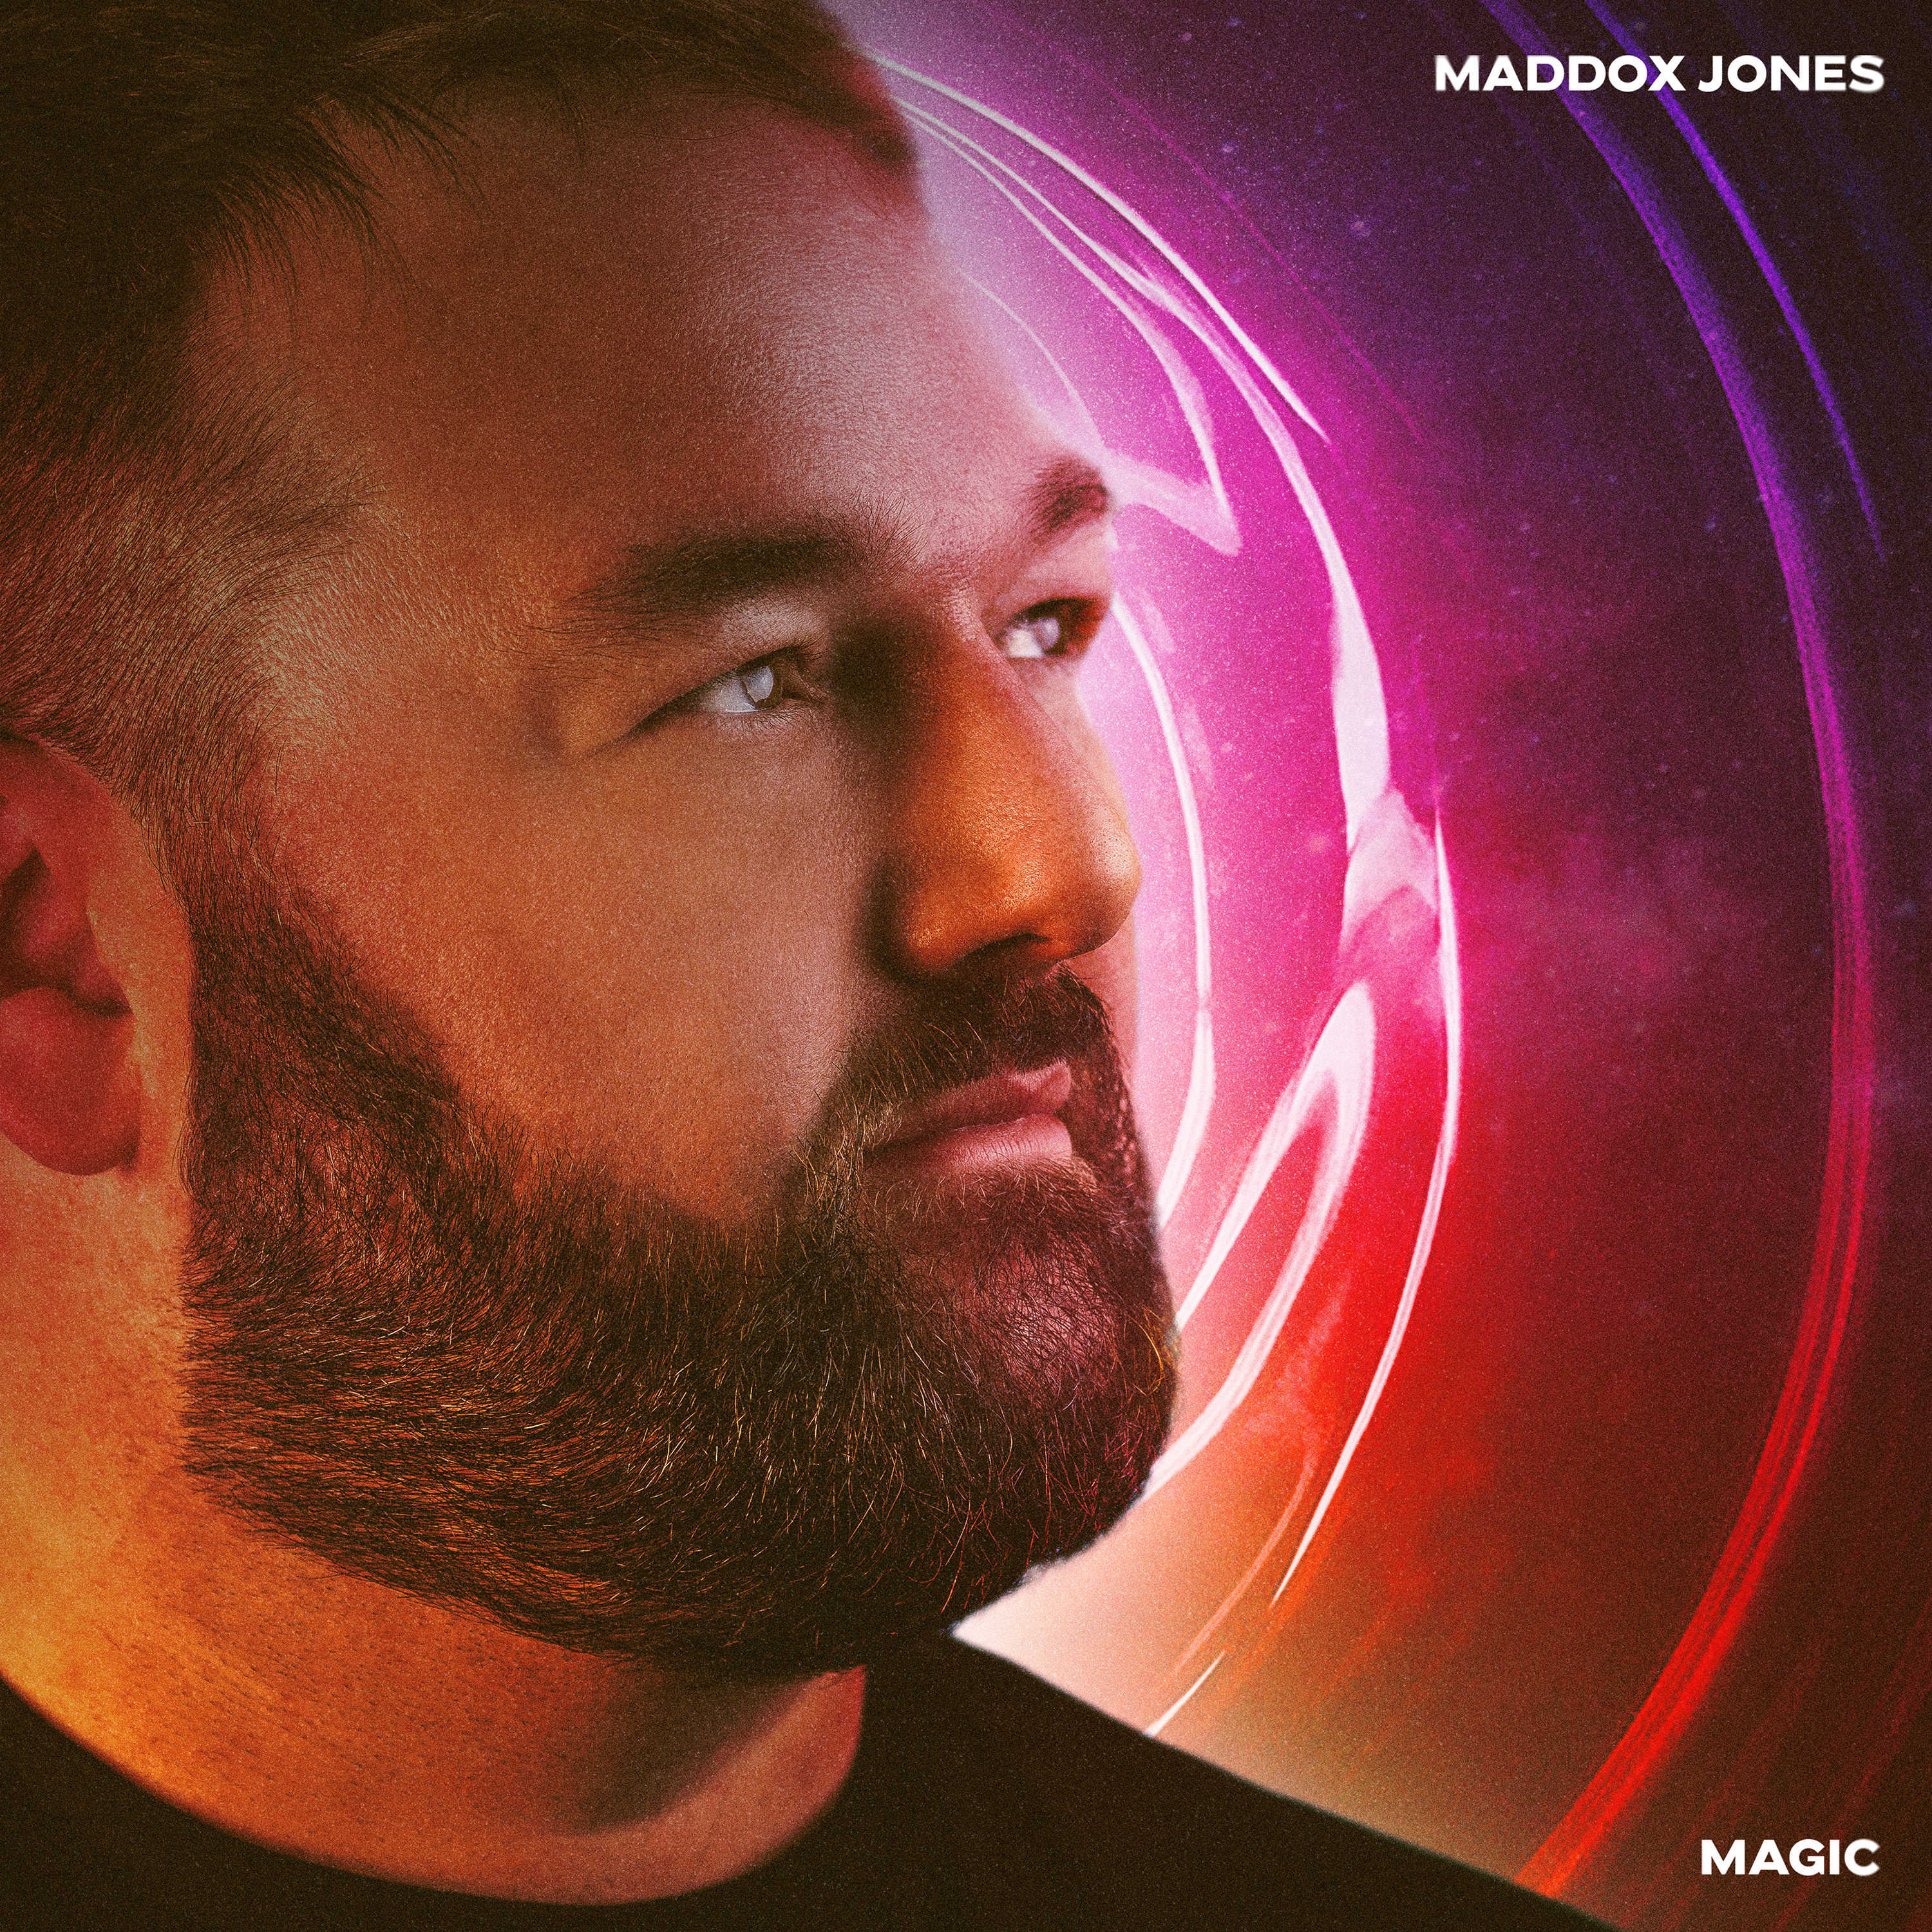 Maddox Jones - Magic - Cover Art 3K